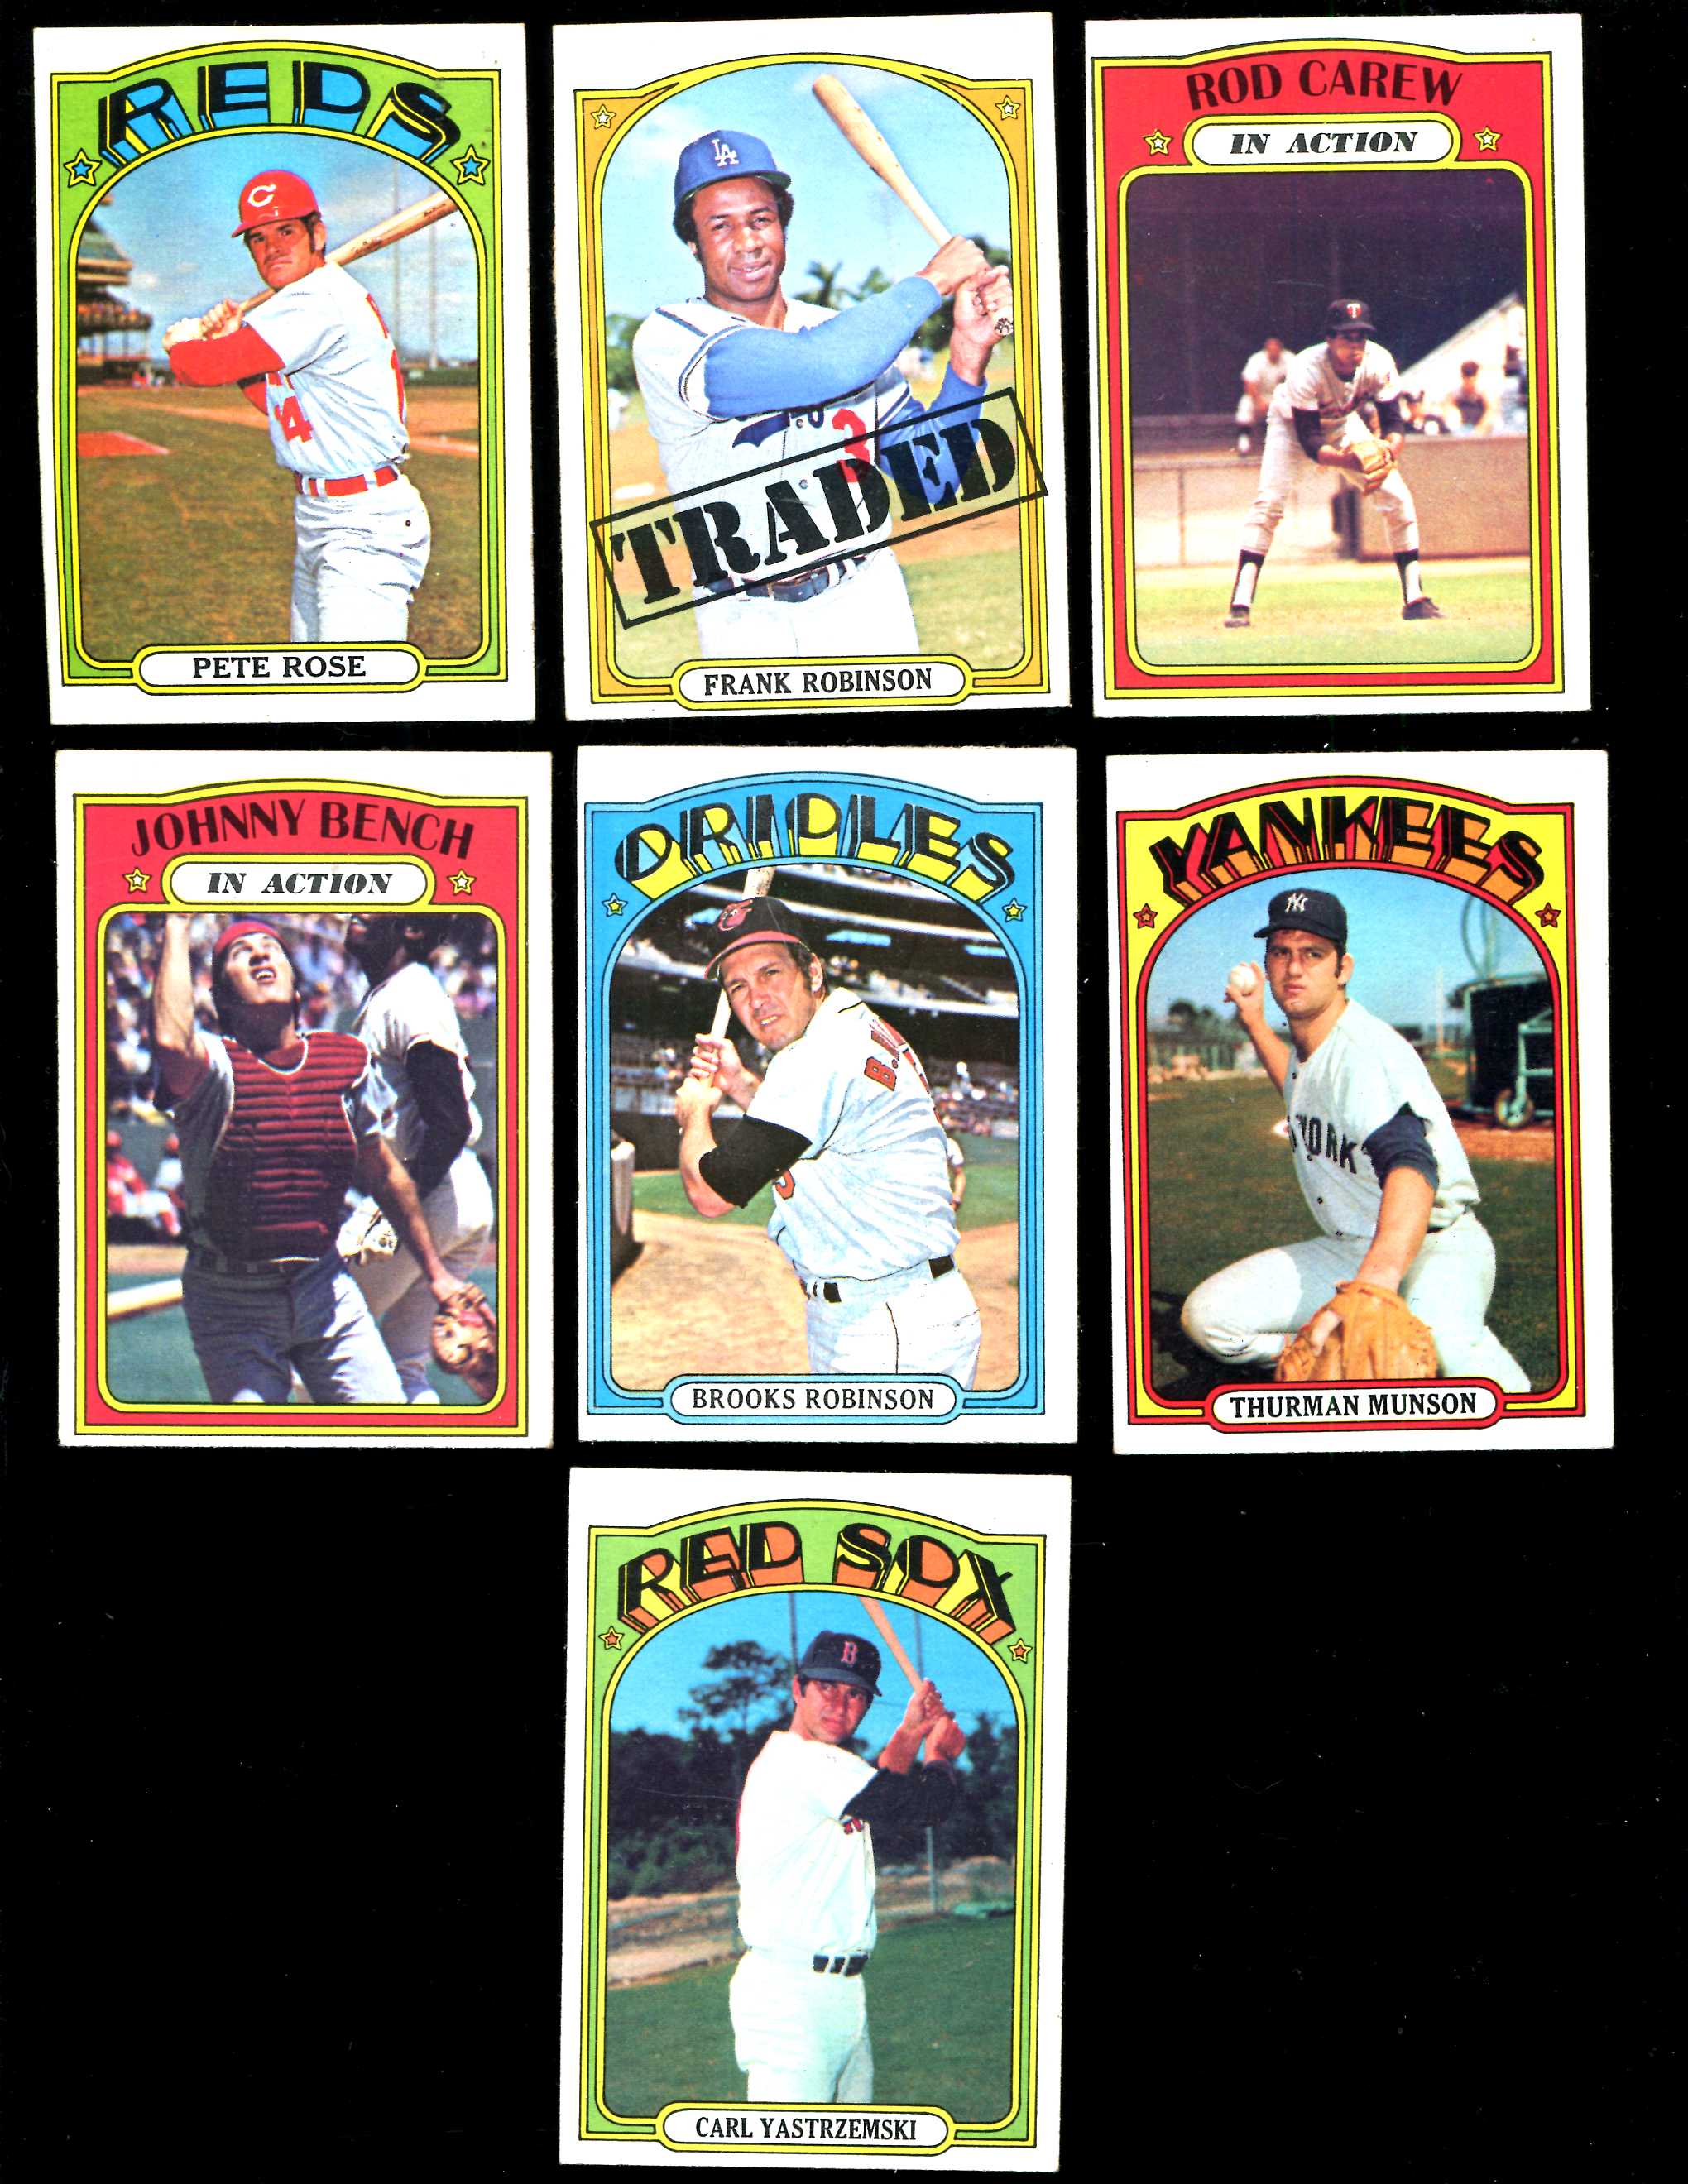 1972 Topps #754 Frank Robinson TRADED SCARCE HIGH # (Dodgers) Baseball cards value